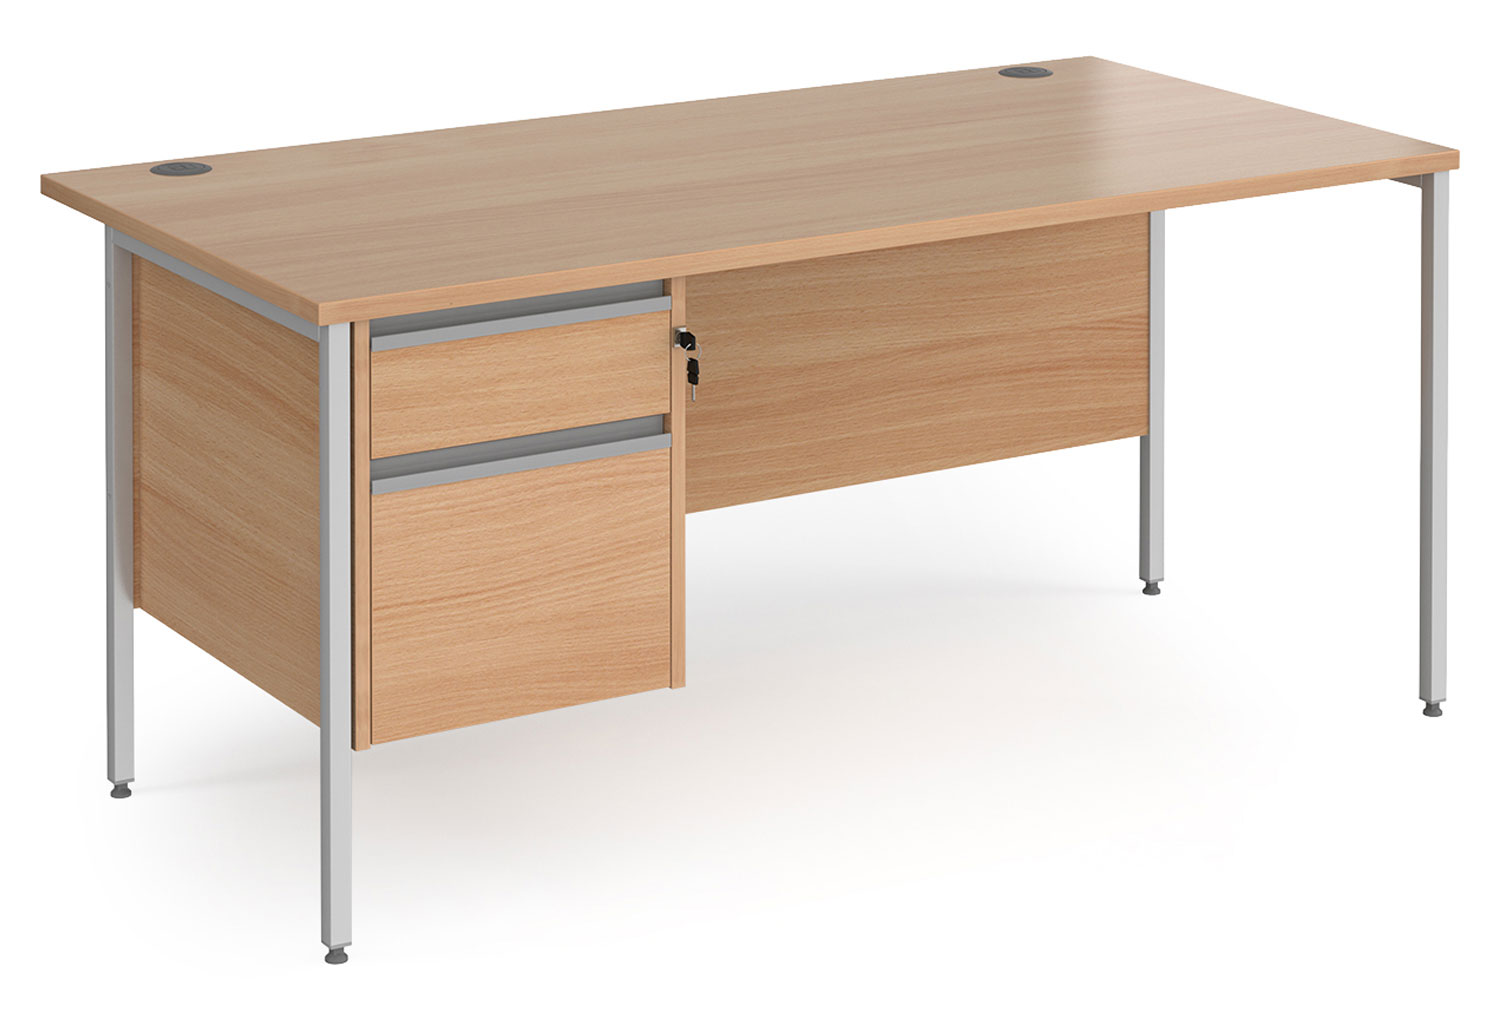 Value Line Classic+ Rectangular H-Leg Office Desk 2 Drawers (Silver Leg), 160wx80dx73h (cm), Beech, Express Delivery